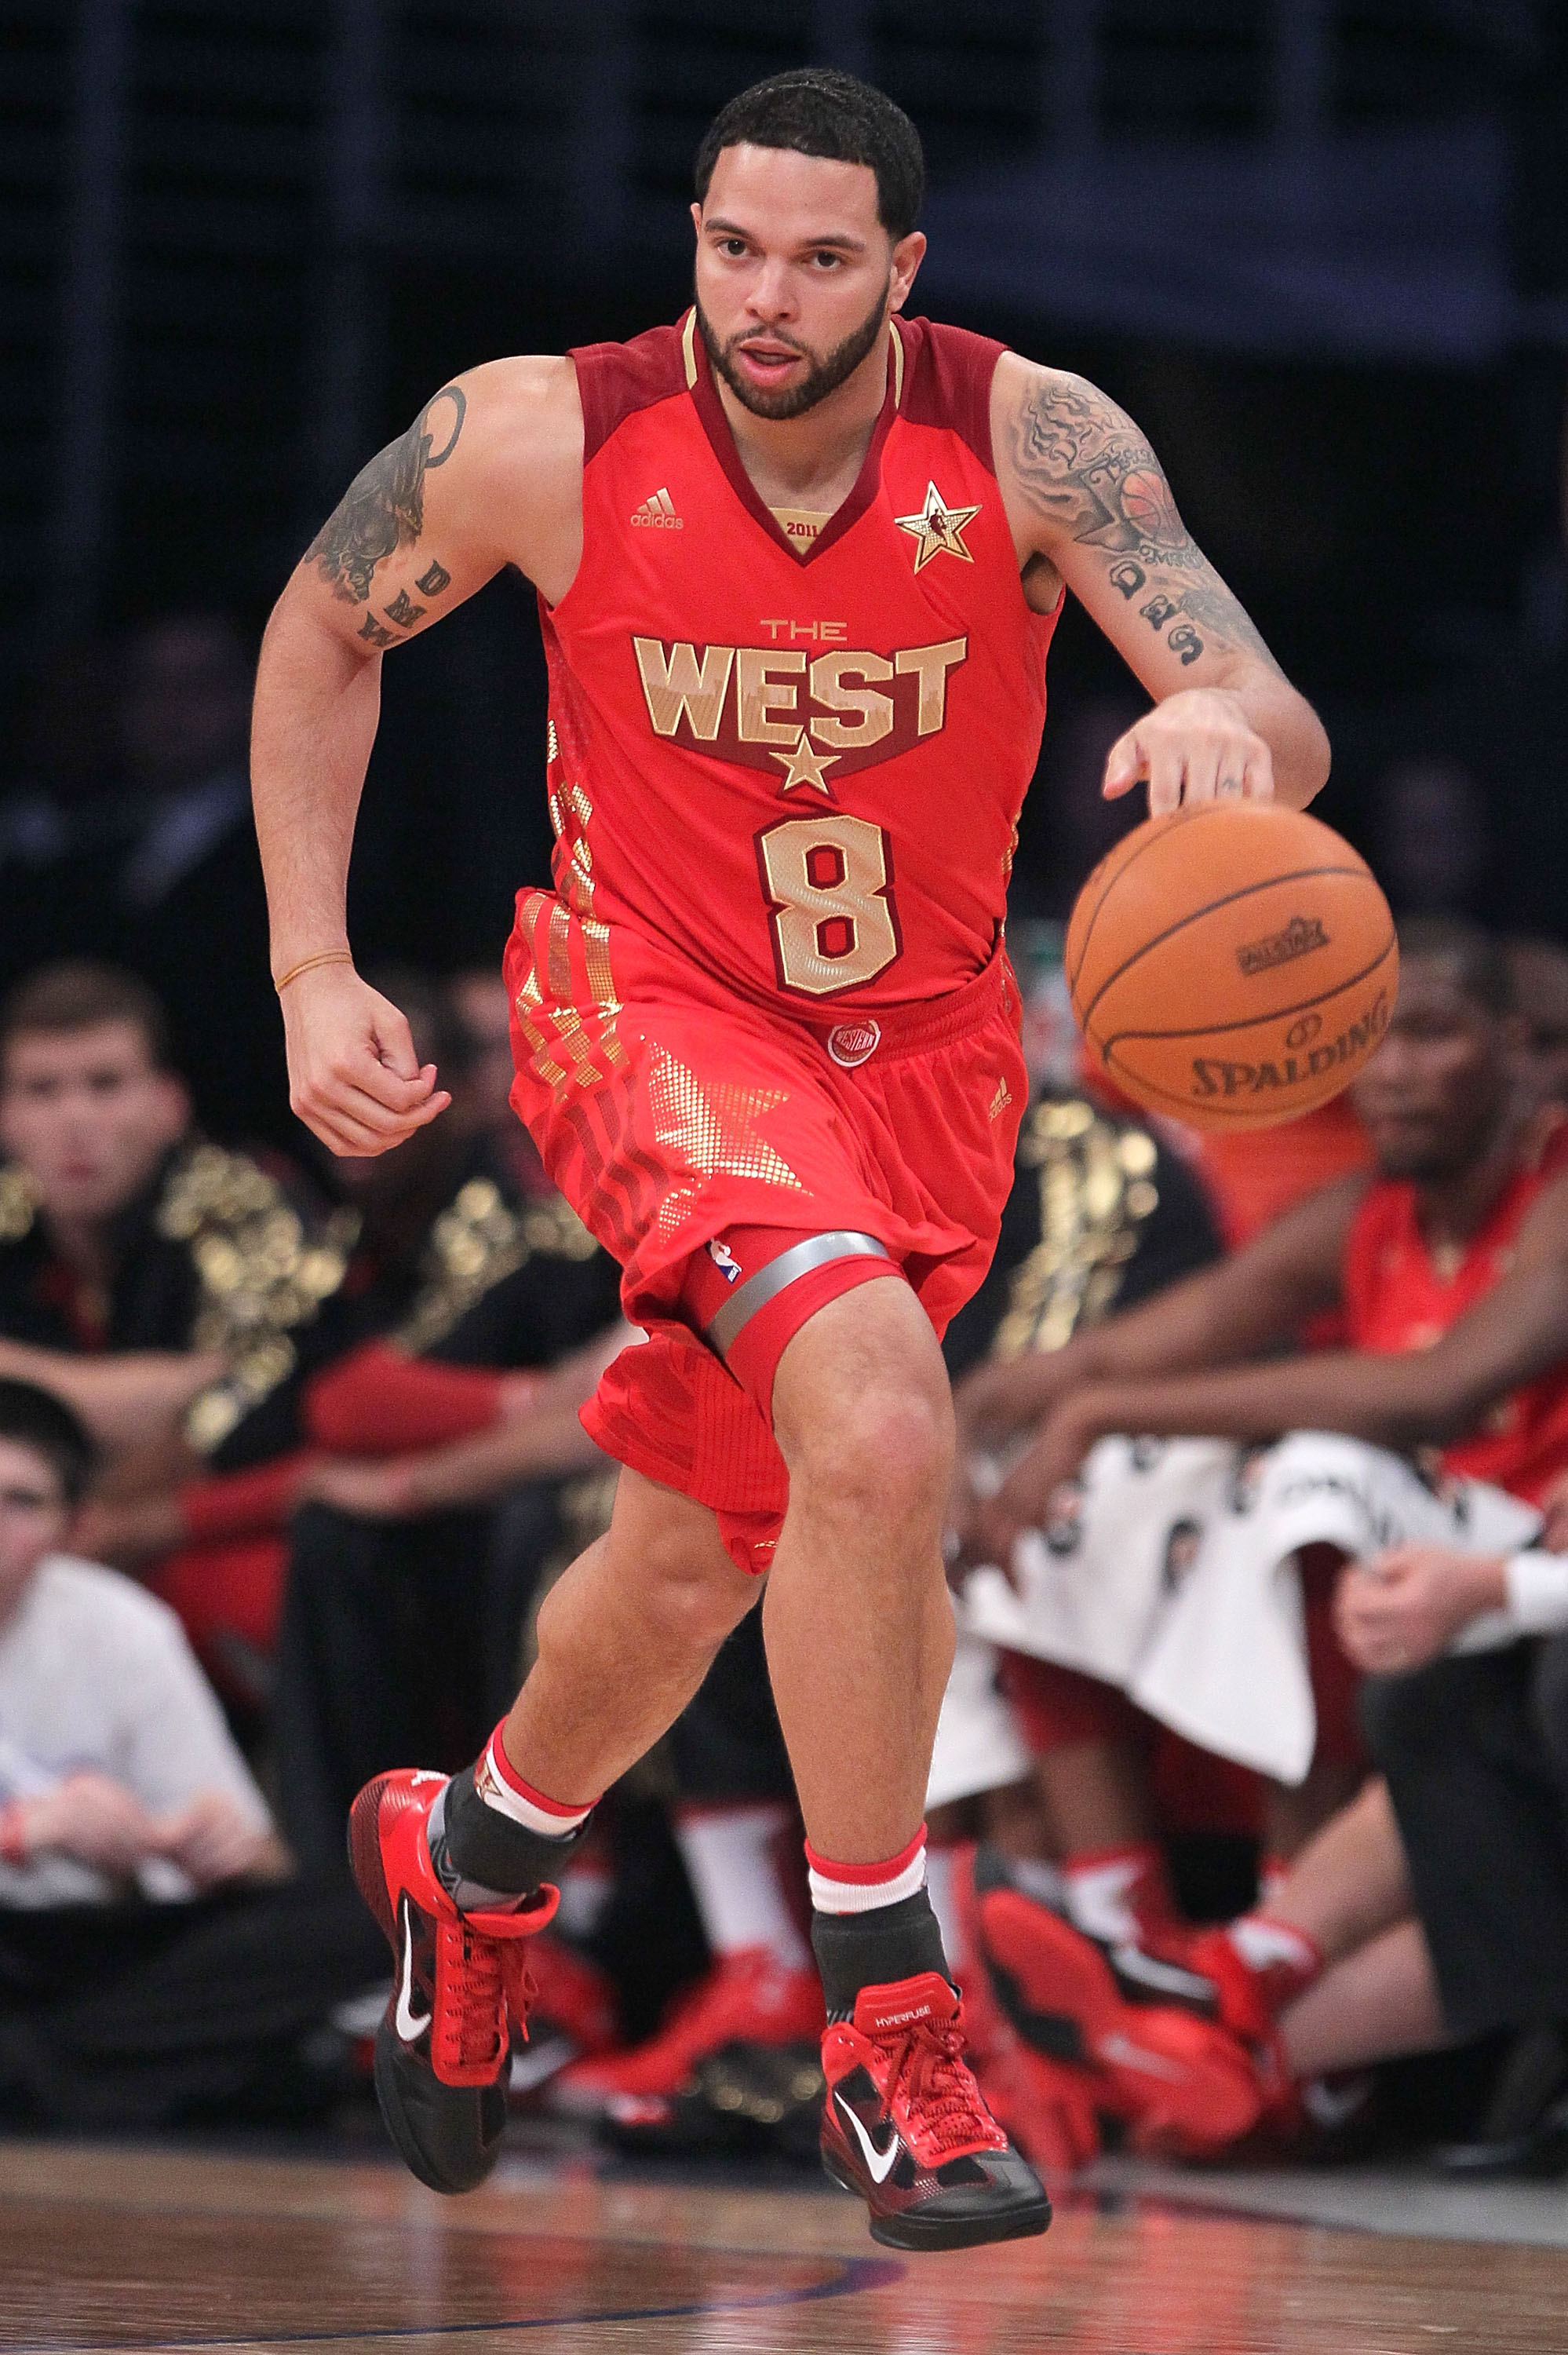 Adidas 2011 Kobe Bryant NBA West All Star Jersey Mens Size Medium +2”  Length